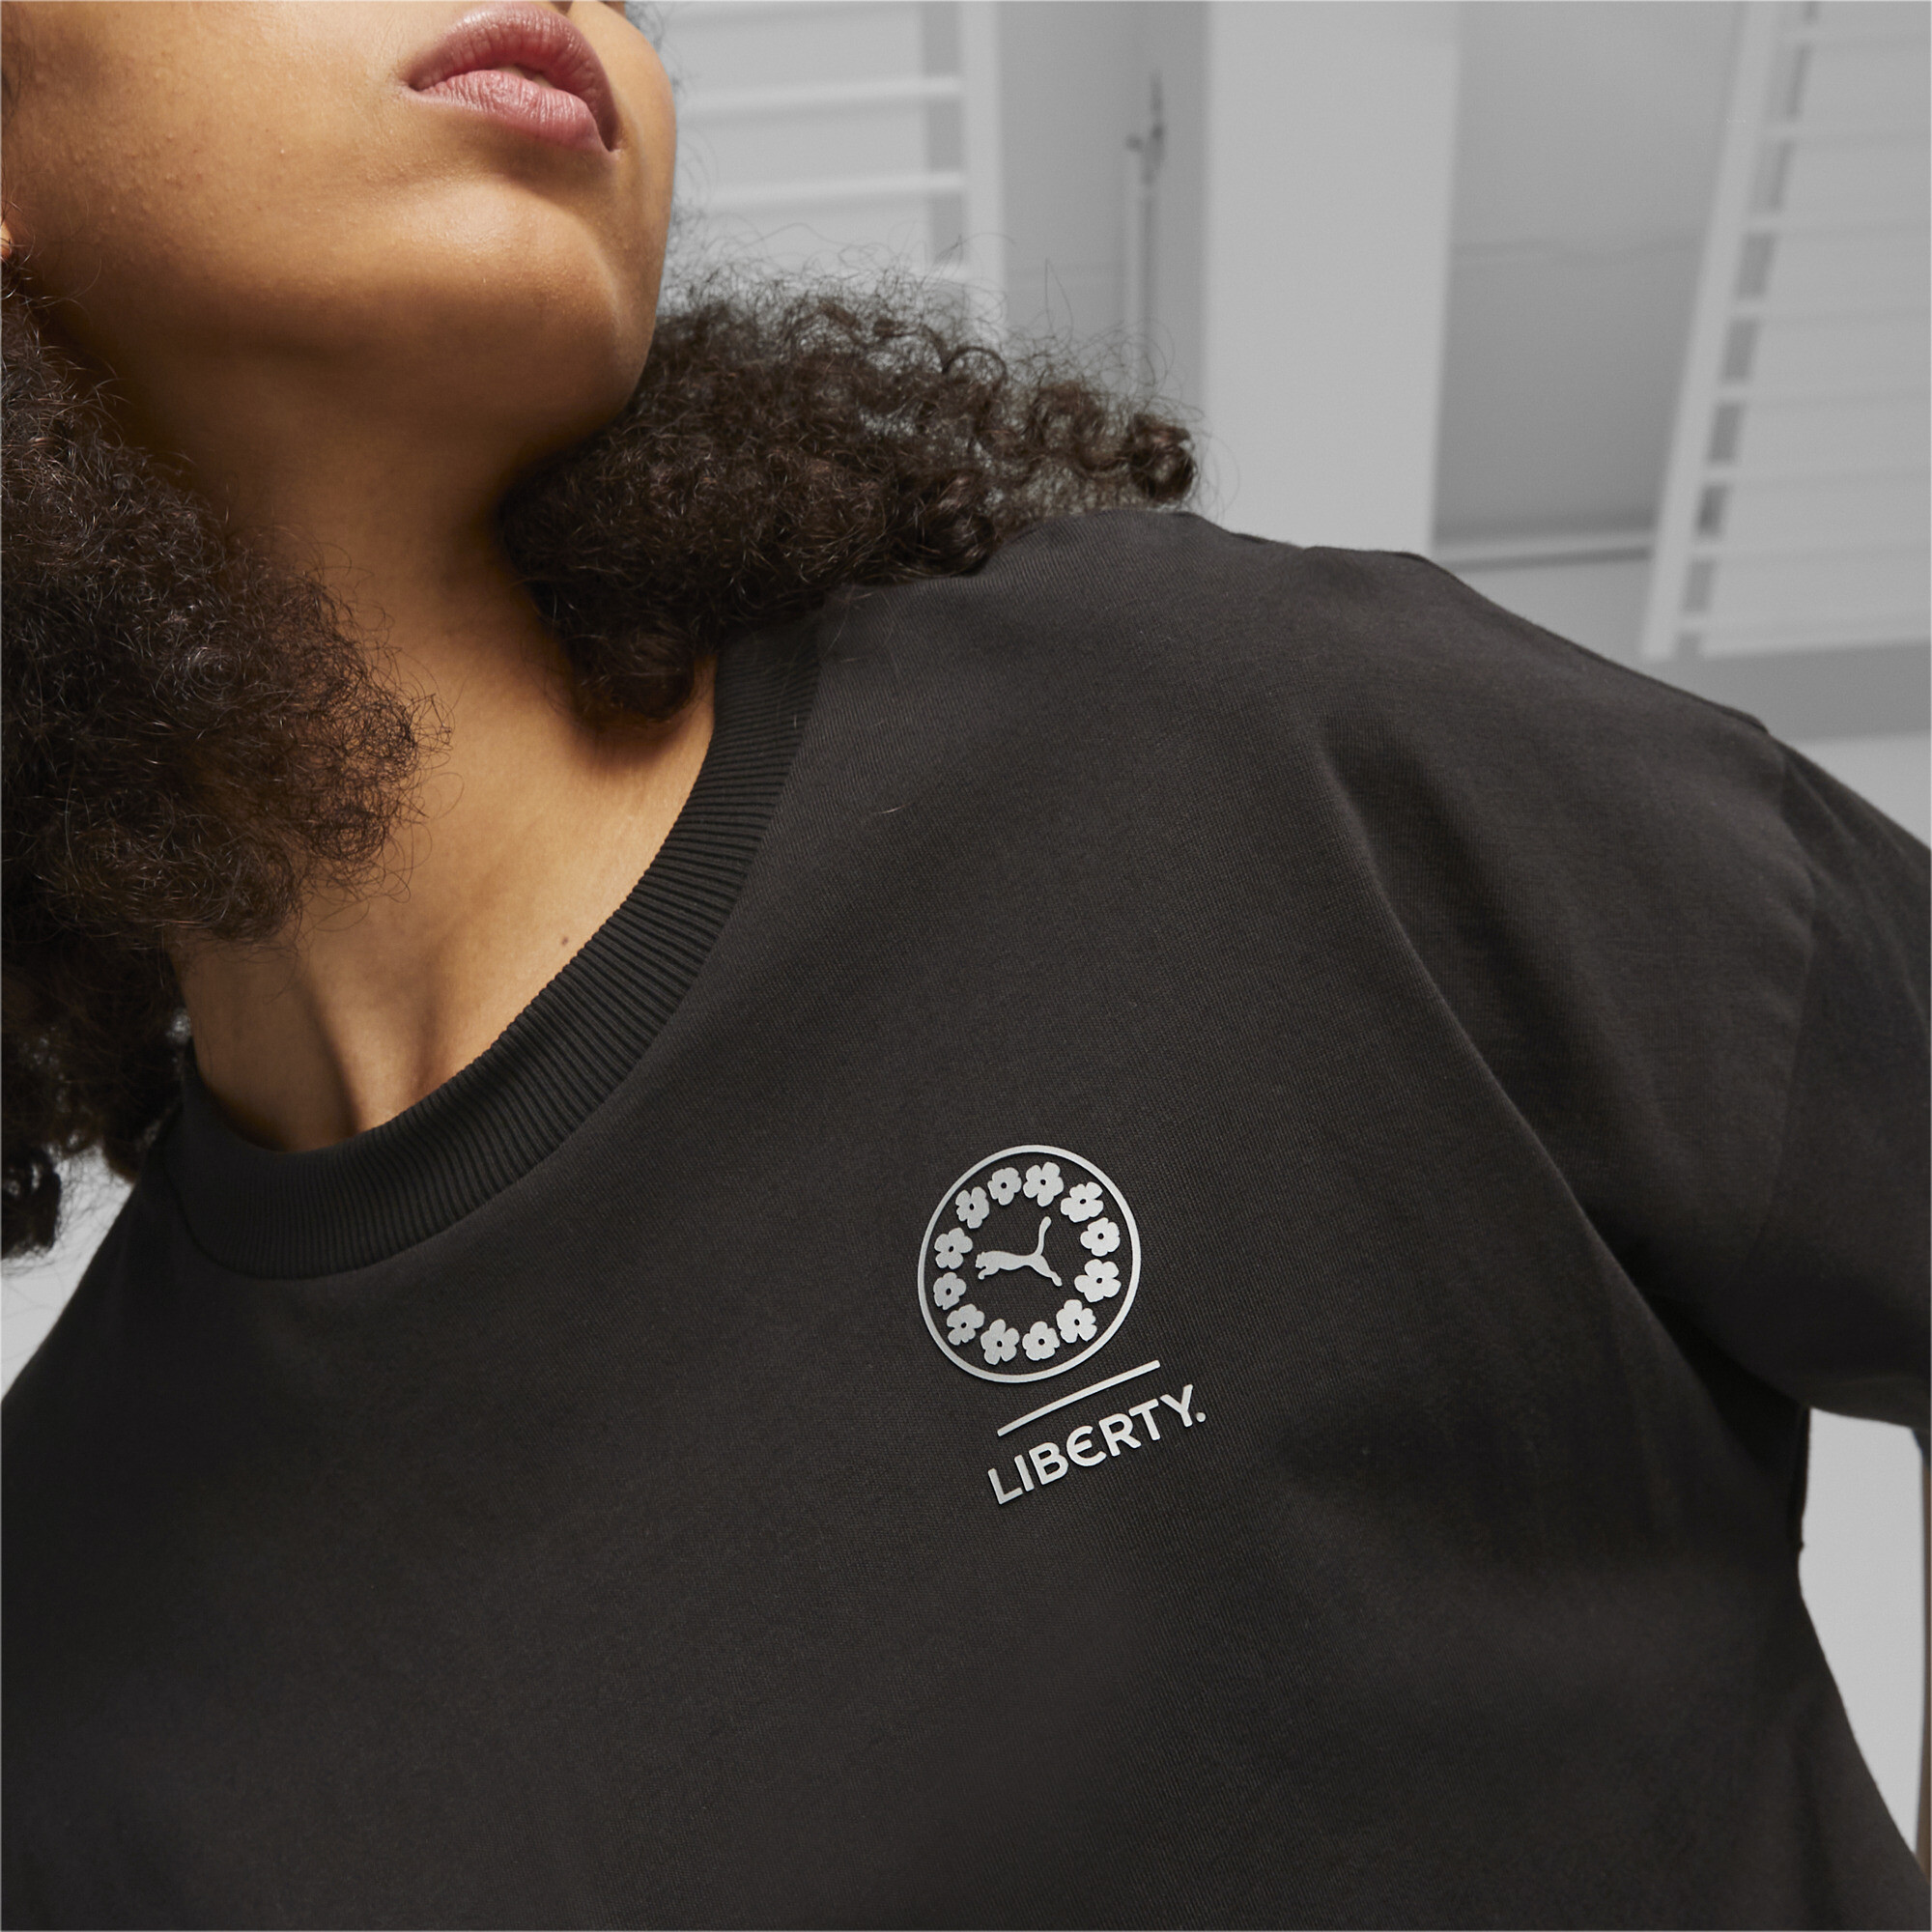 Women's PUMA X LIBERTY Graphic T-Shirt In Black, Size XS